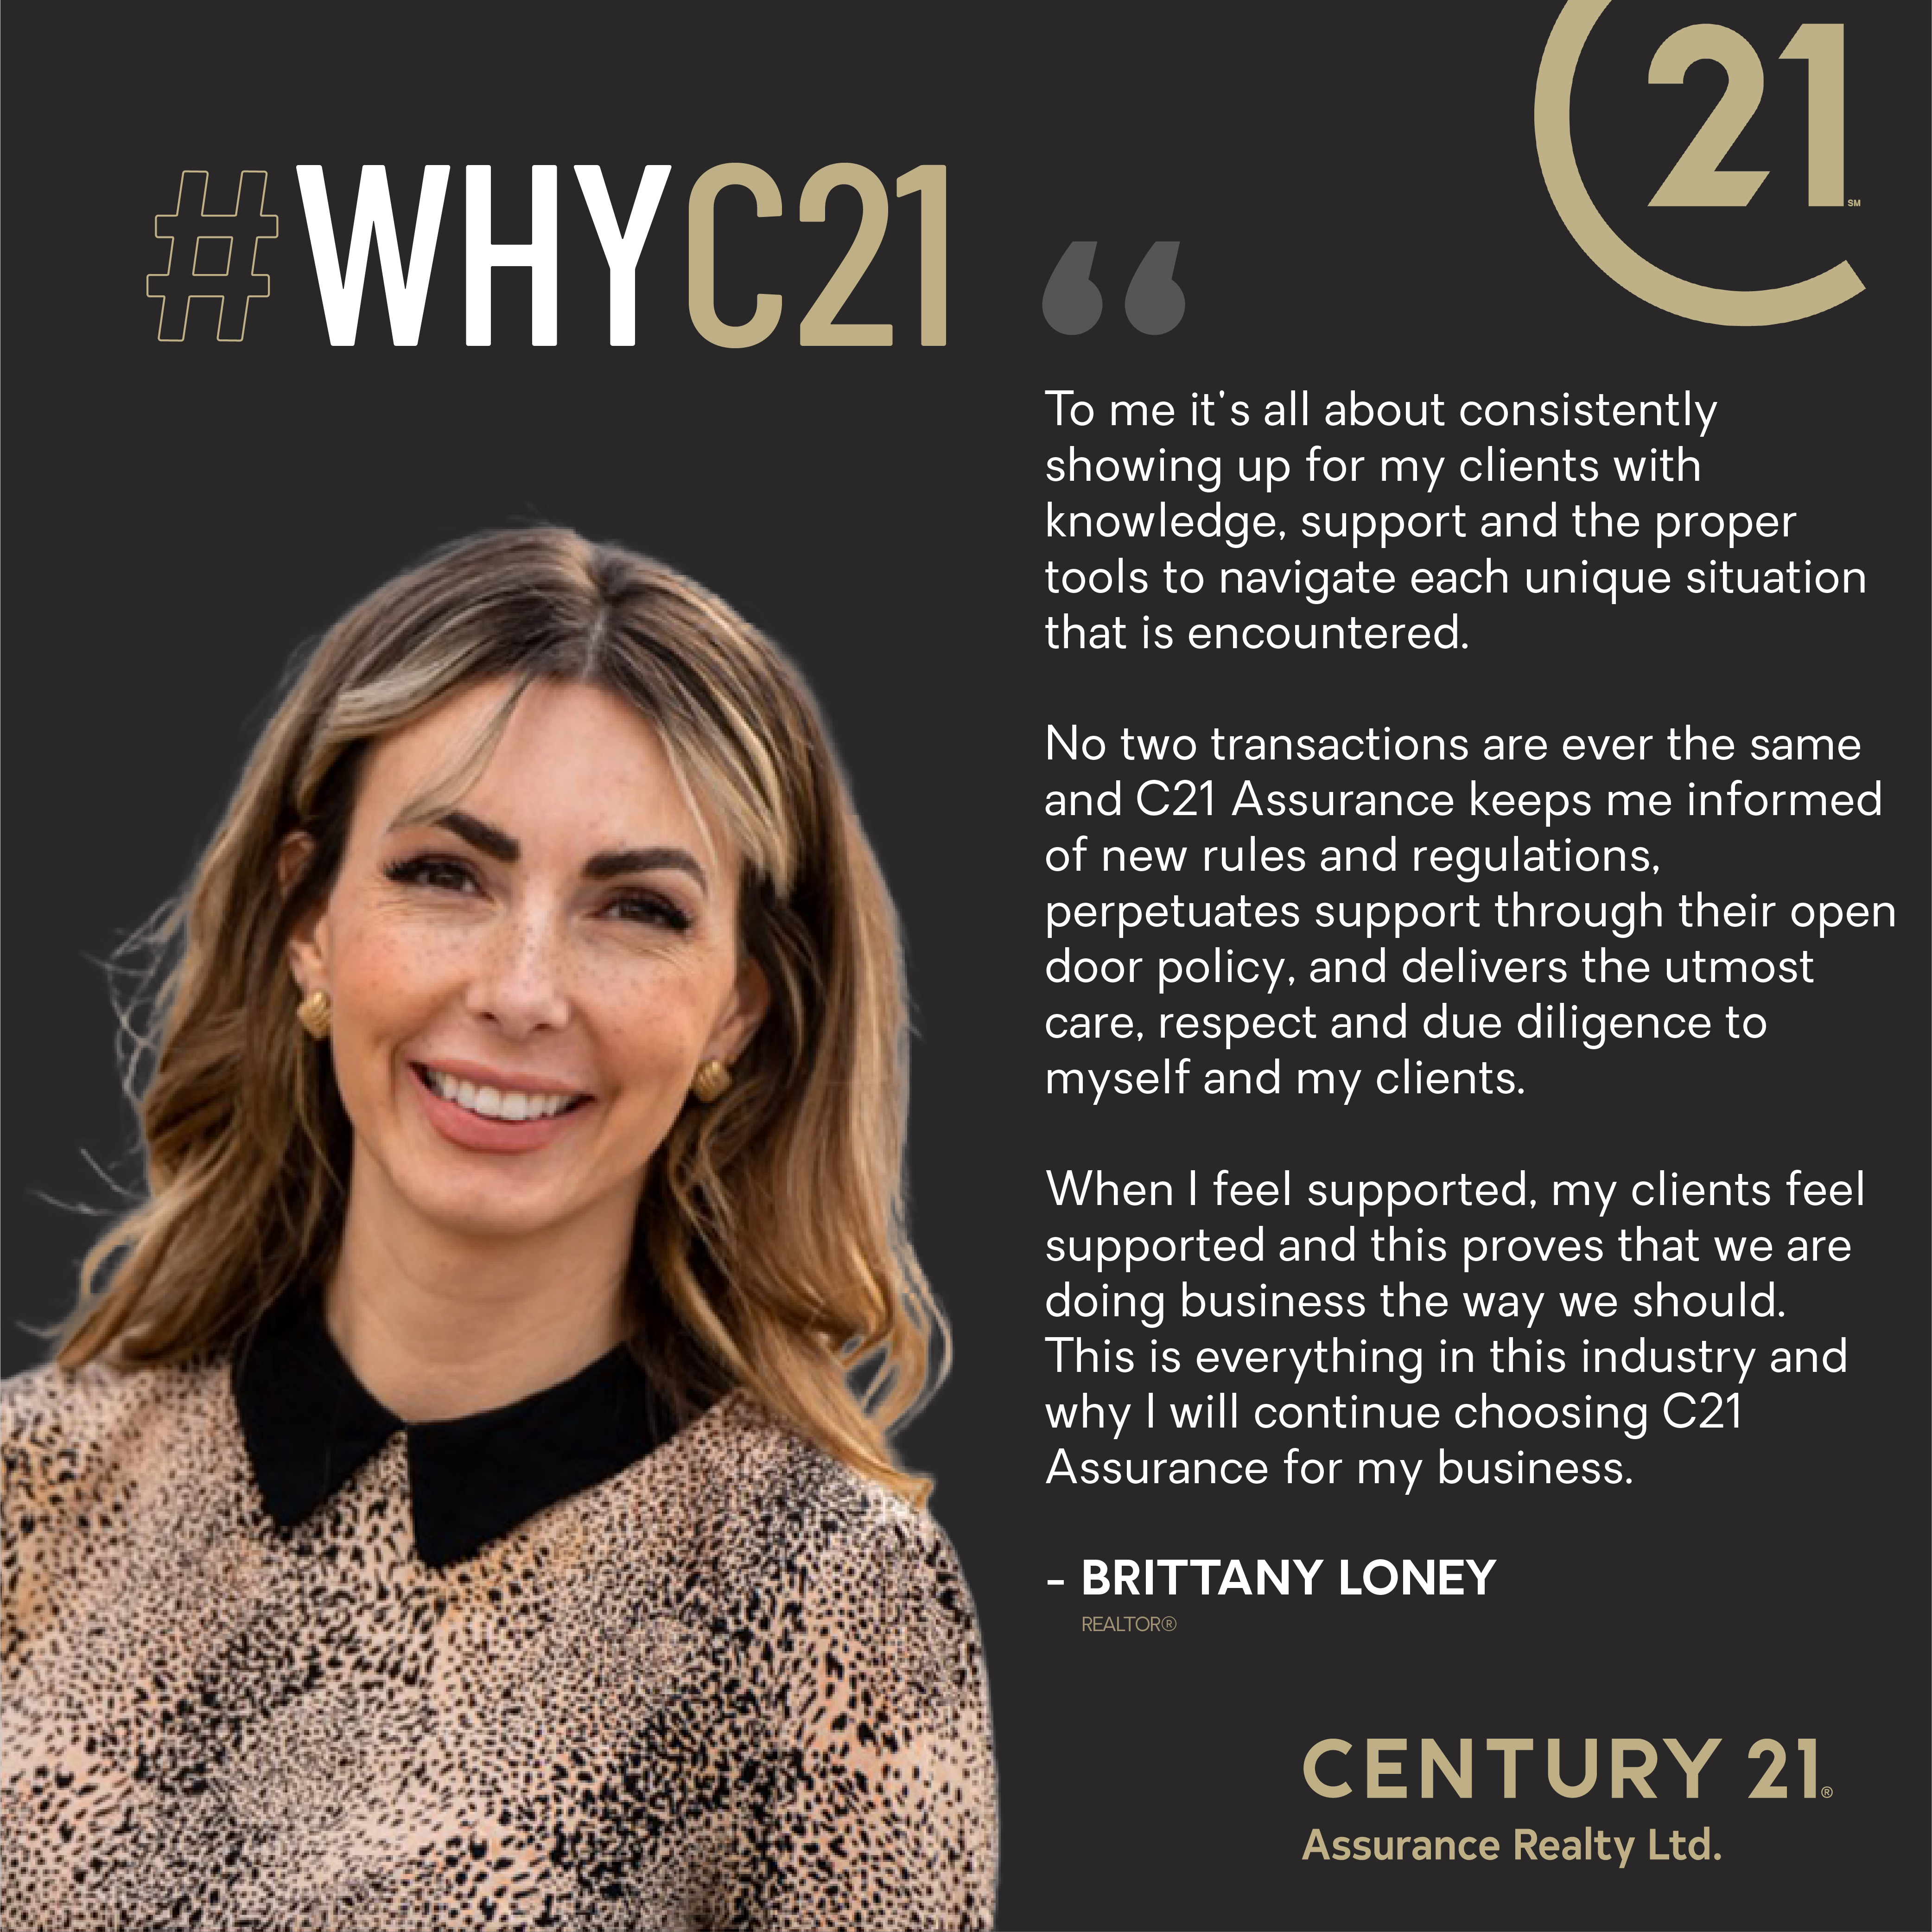 WhyC21_Brittany Loney